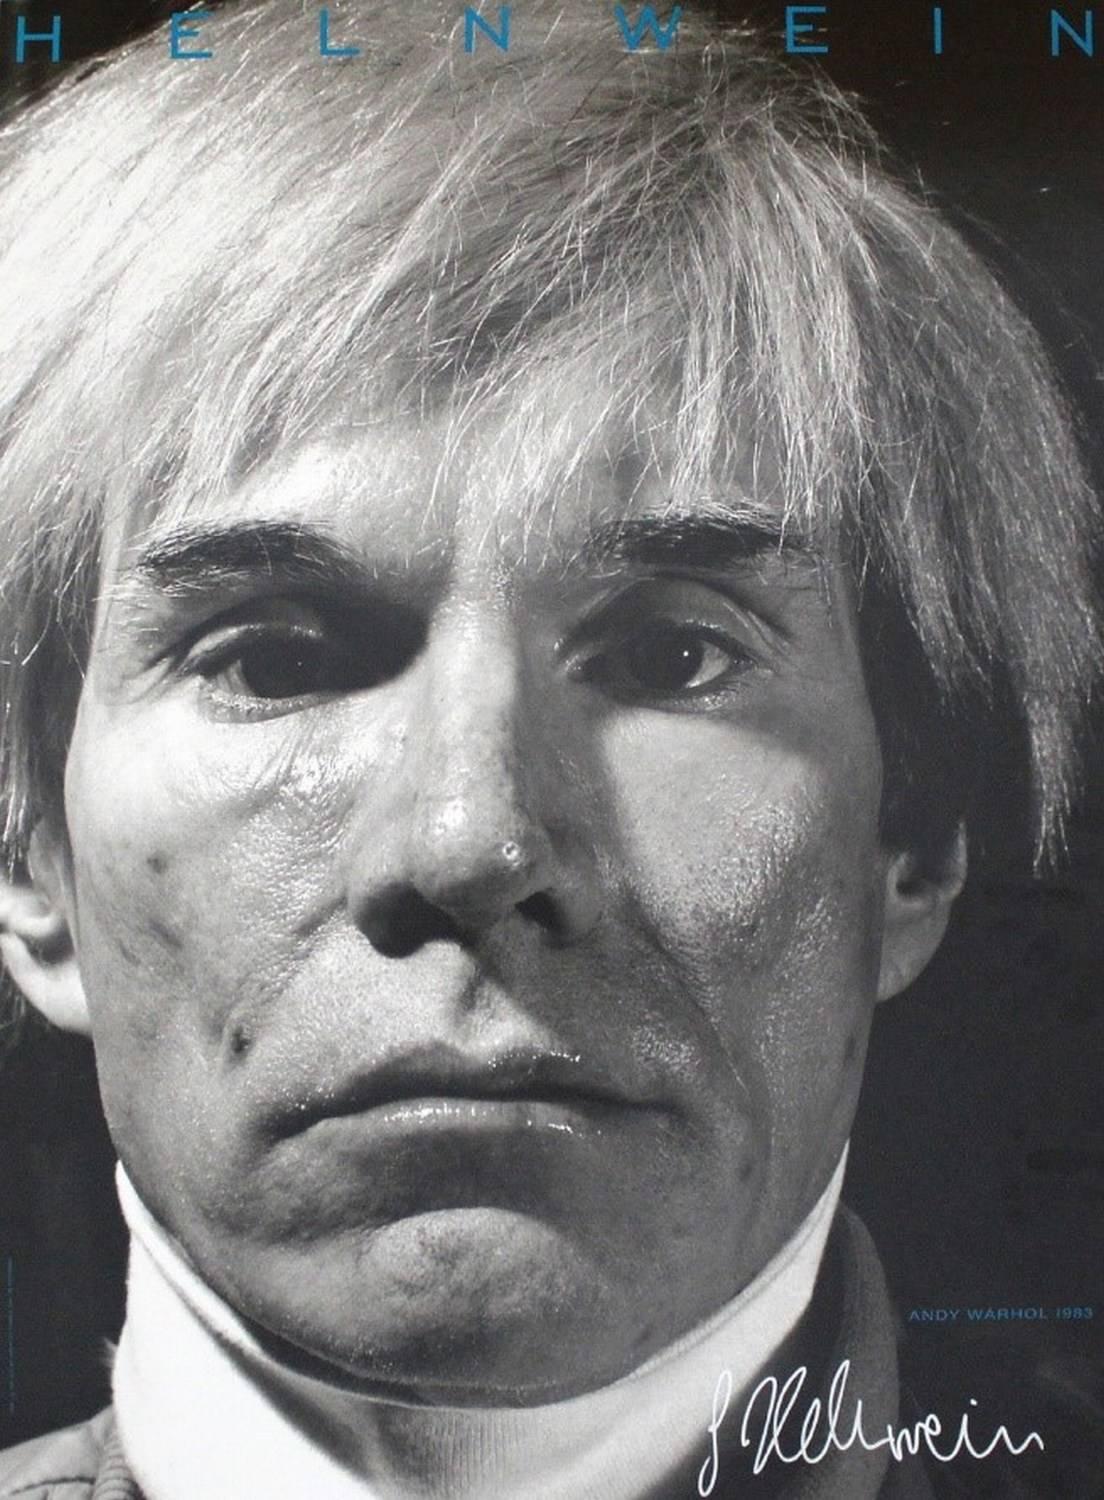 Gottfried Helnwein Portrait Photograph - Andy Warhol